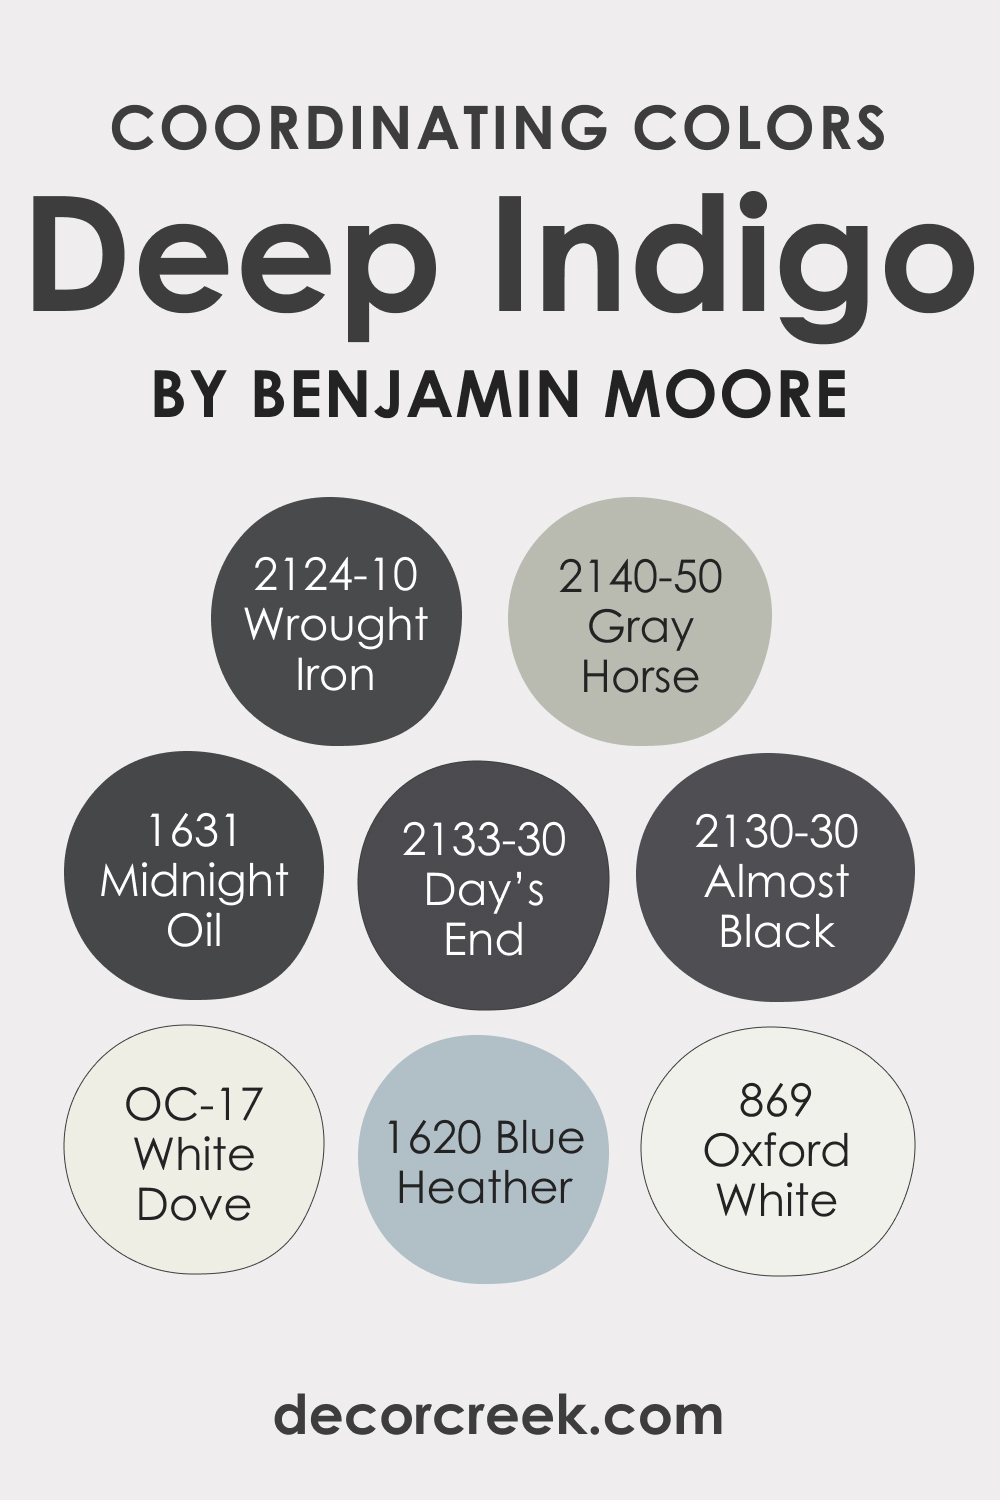 Coordinating Colors of Deep Indigo 1442